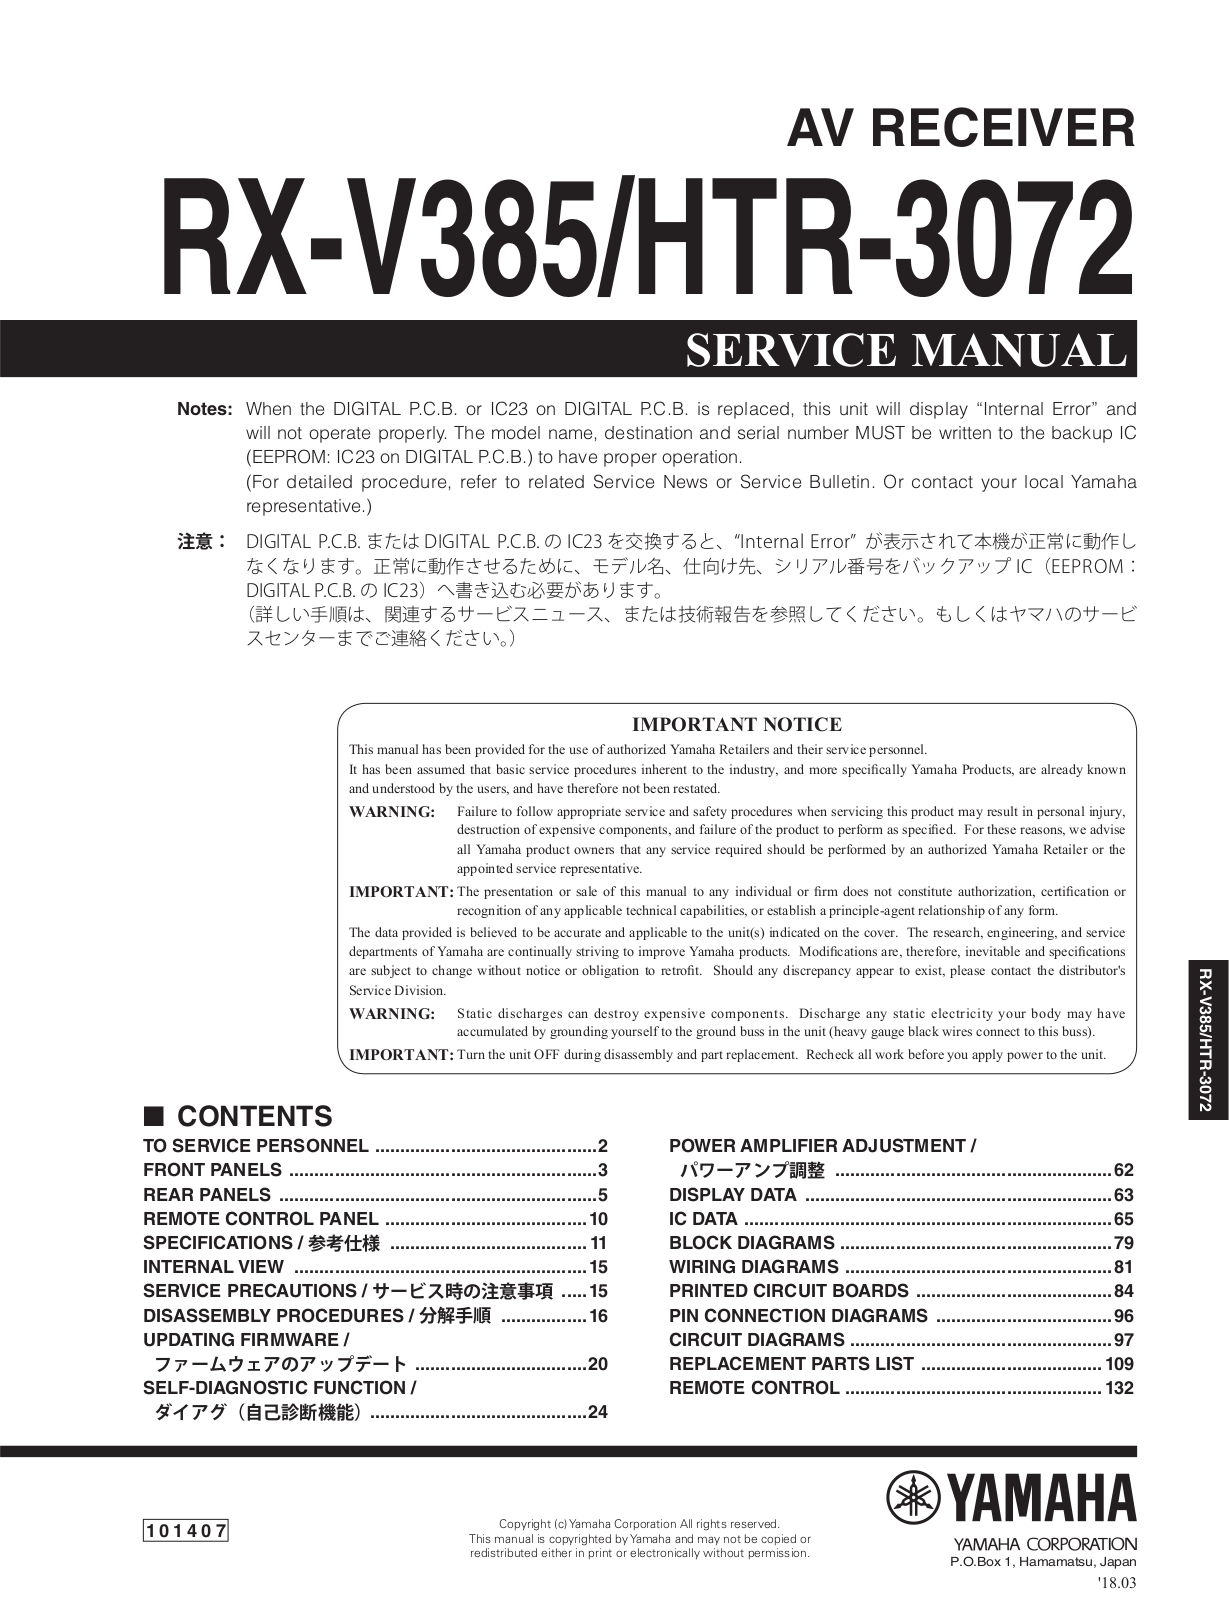 Yamaha RX-V385, HTR-372 Service Manual